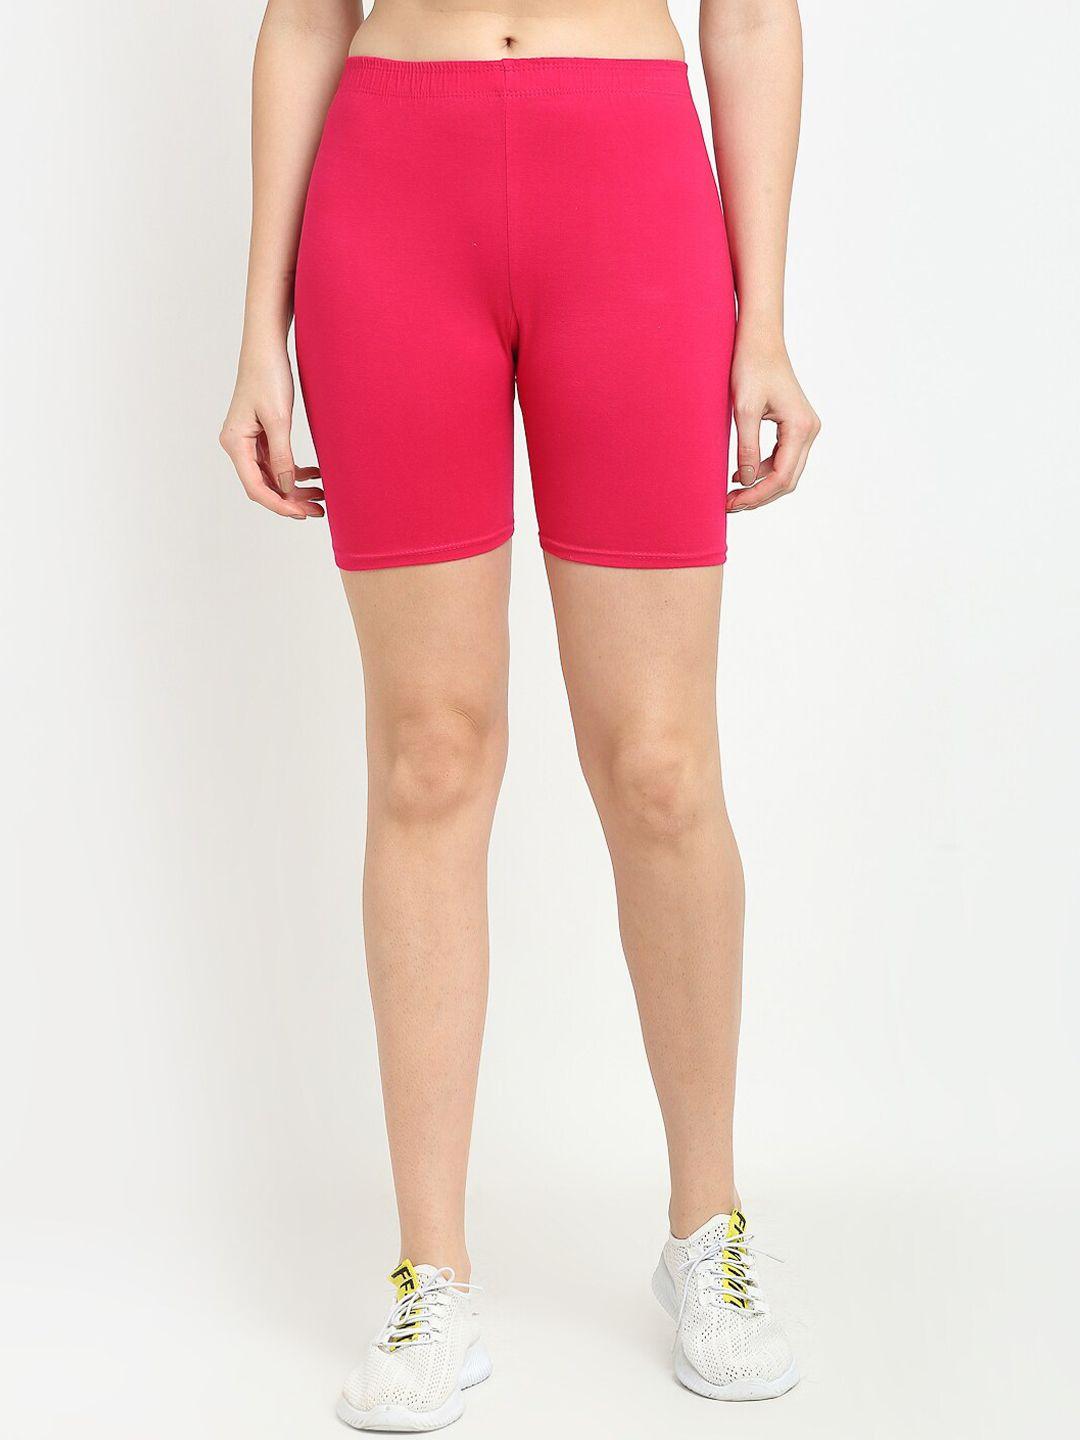 gracit women pink cycling sports shorts